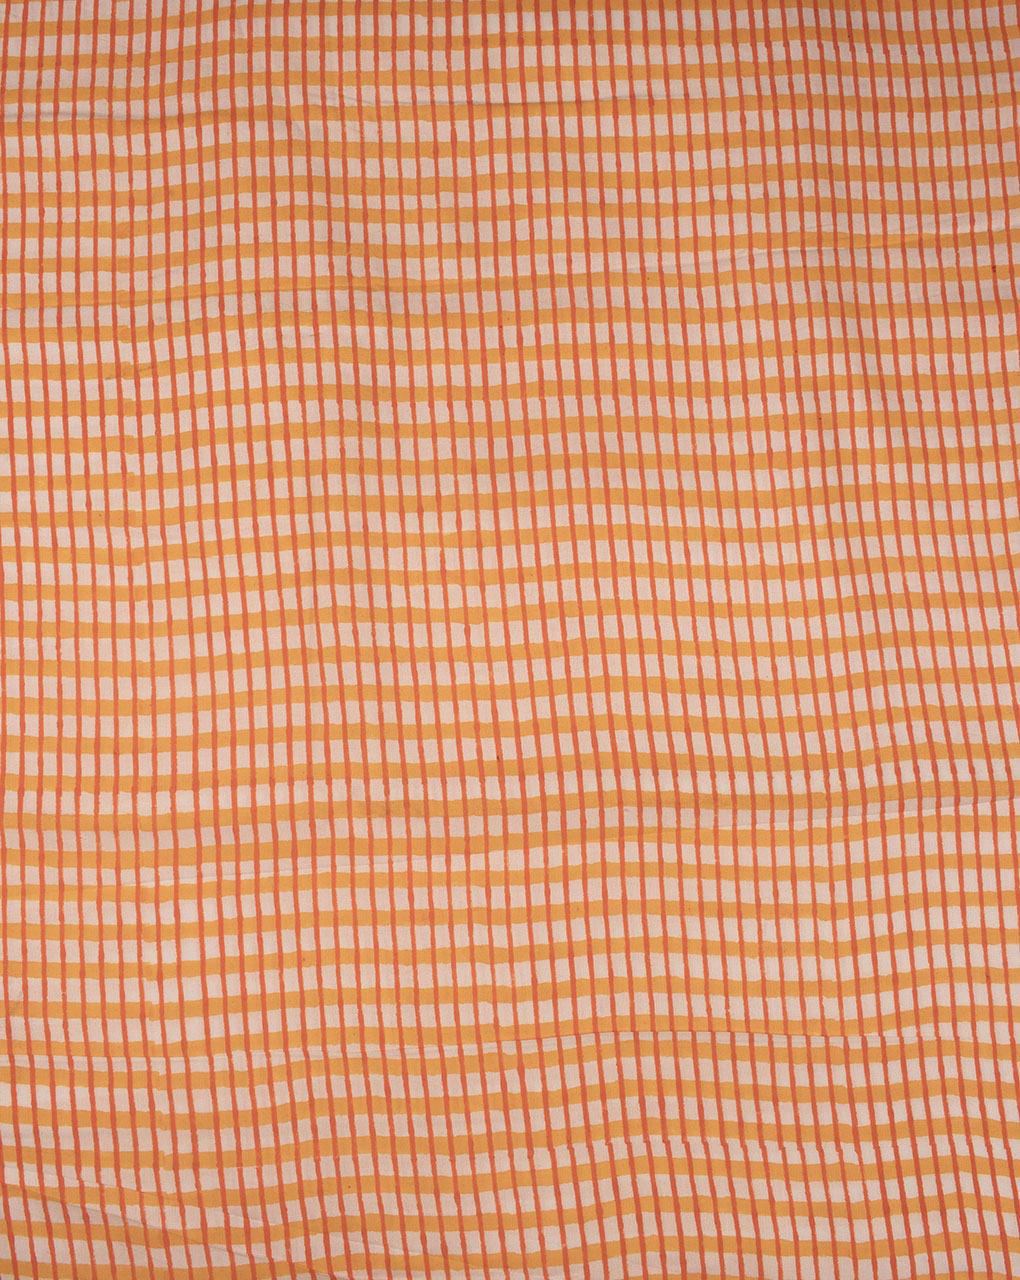 Checks Screen Print Rayon Fabric - Fabriclore.com